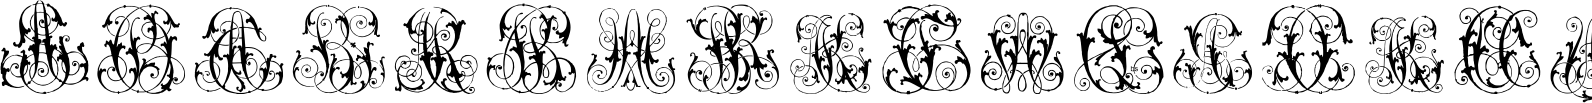 Intellecta Monograms Special Series AECZ Font TrueType